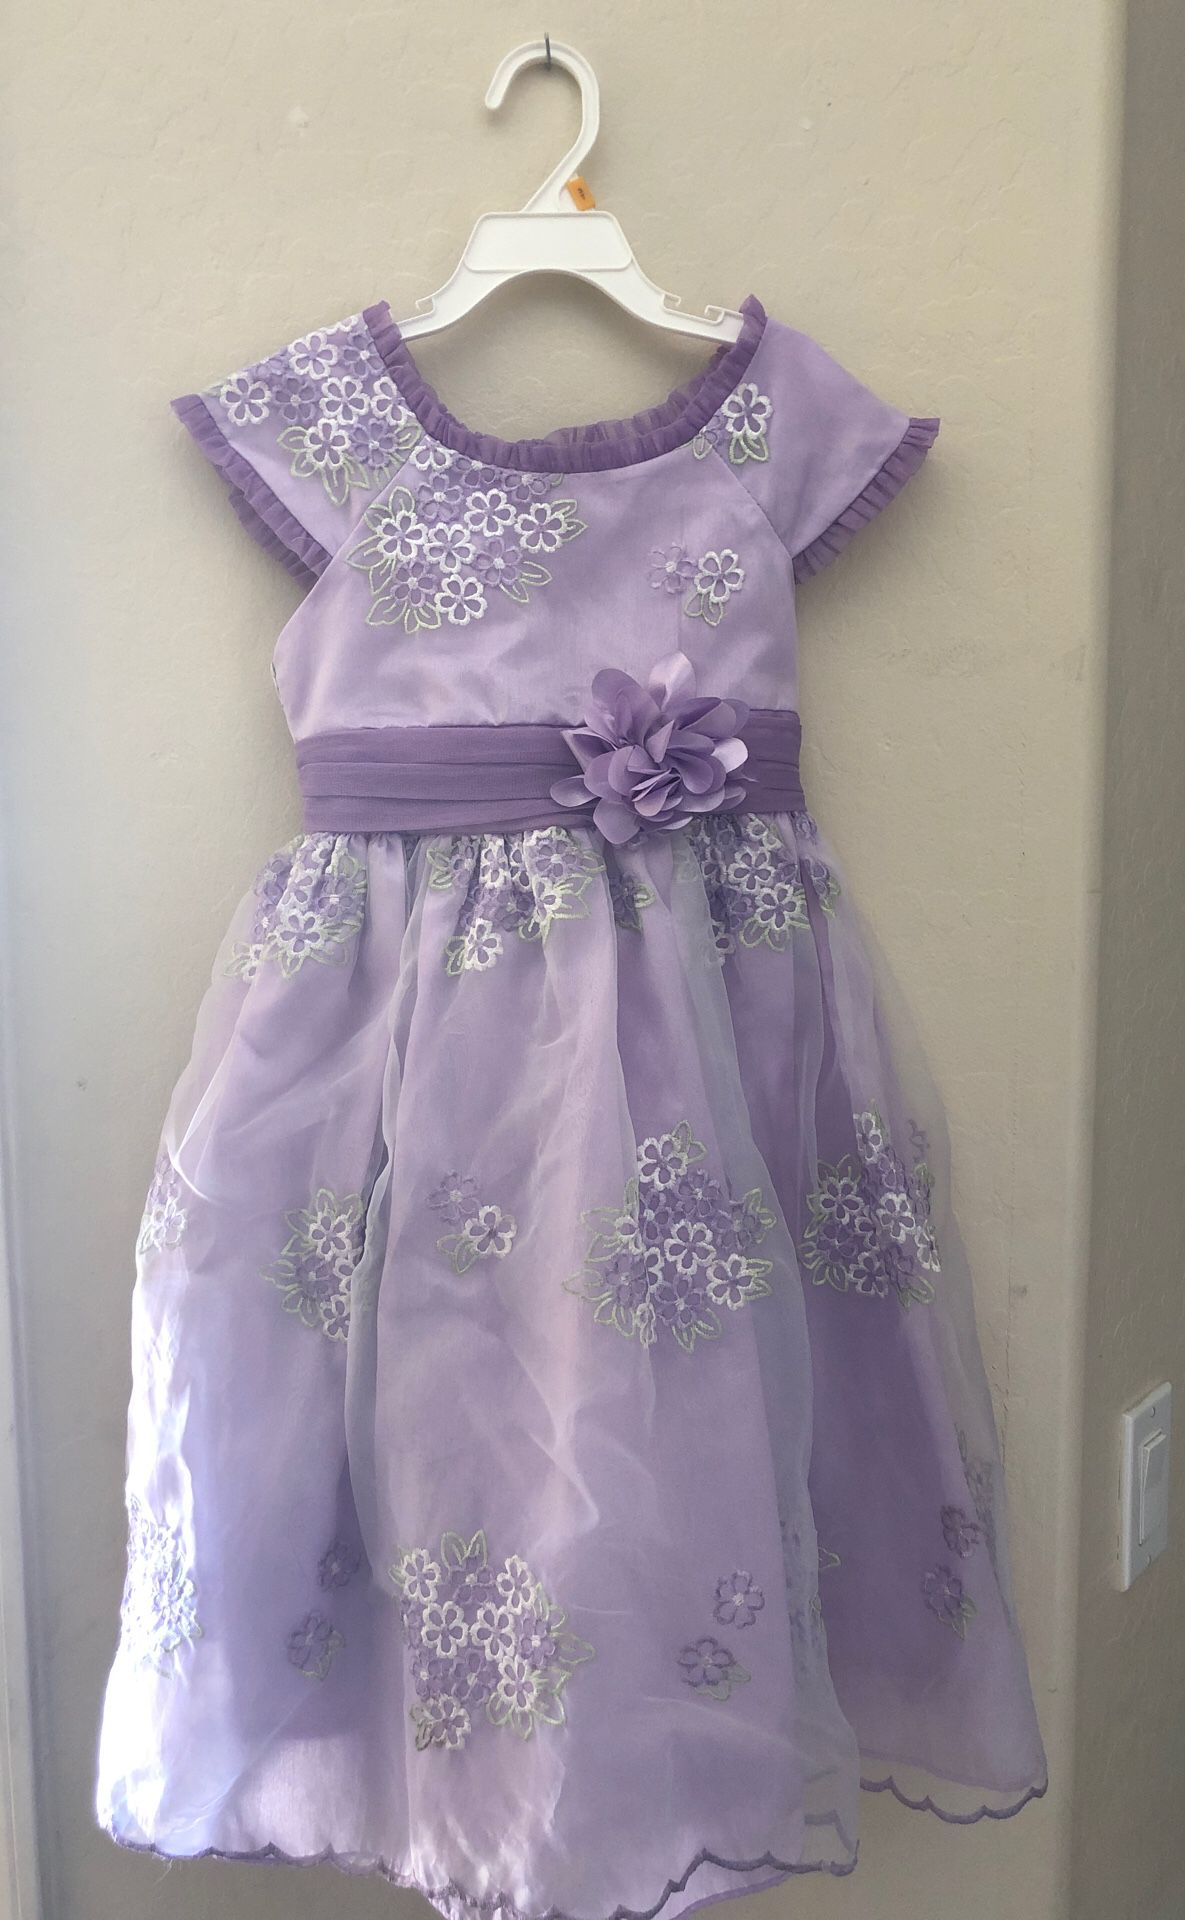 Girls purple Jona Michelle Easter/Spring dress size 7